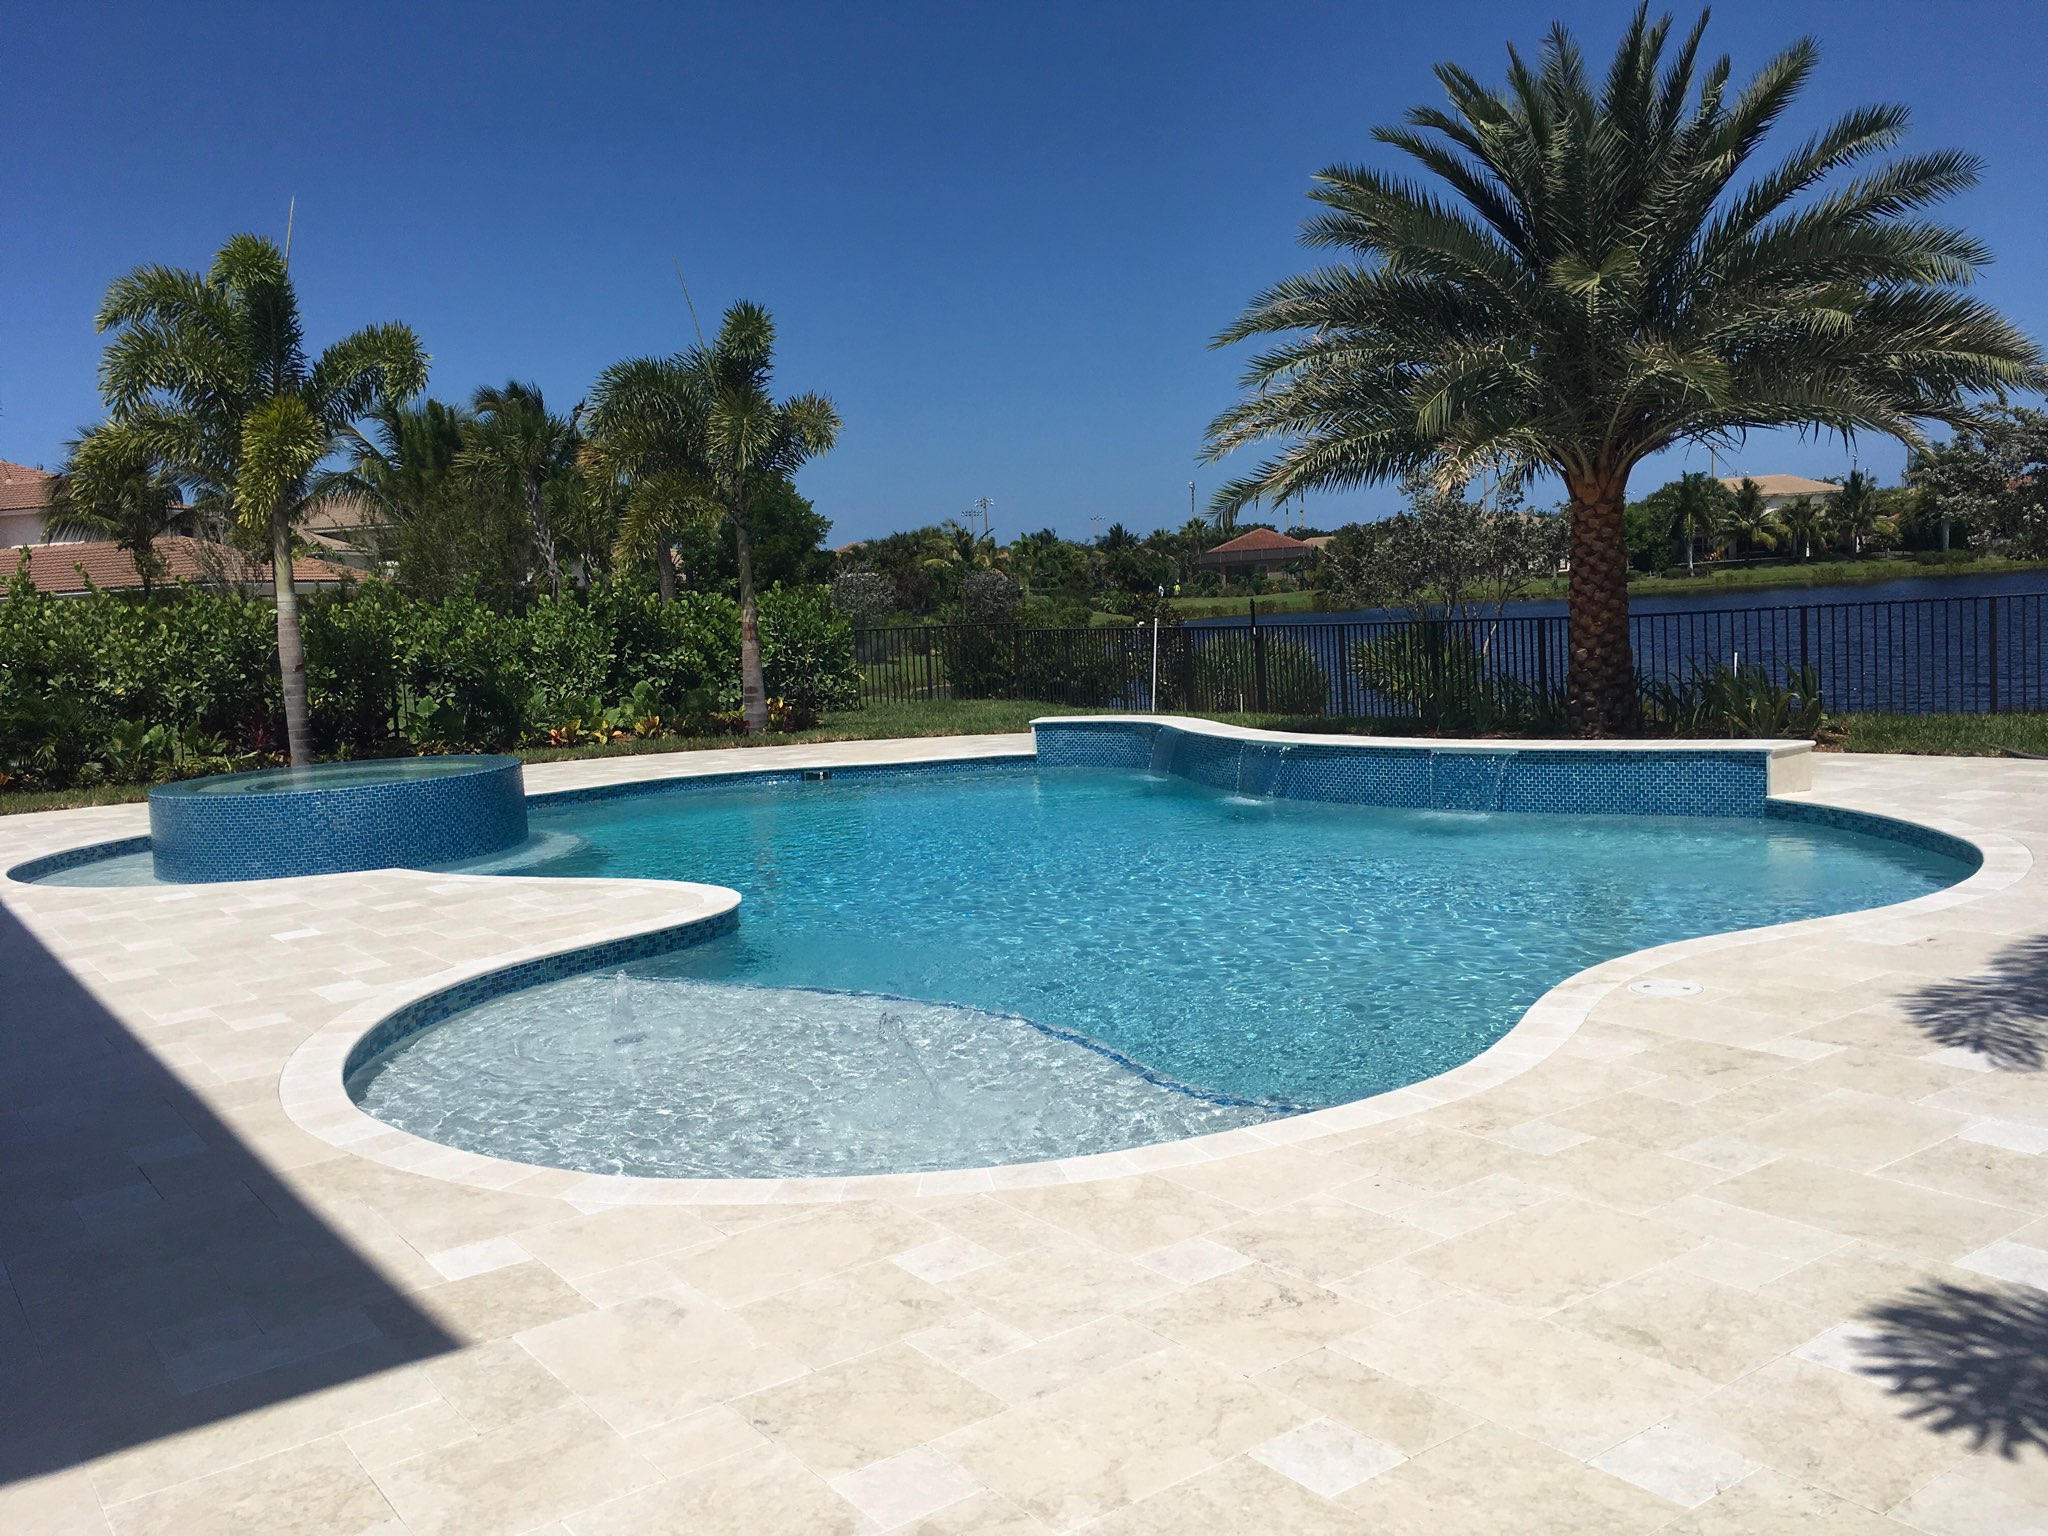 rhr pools of jupiter raised infinity spa with oversized sunshelf